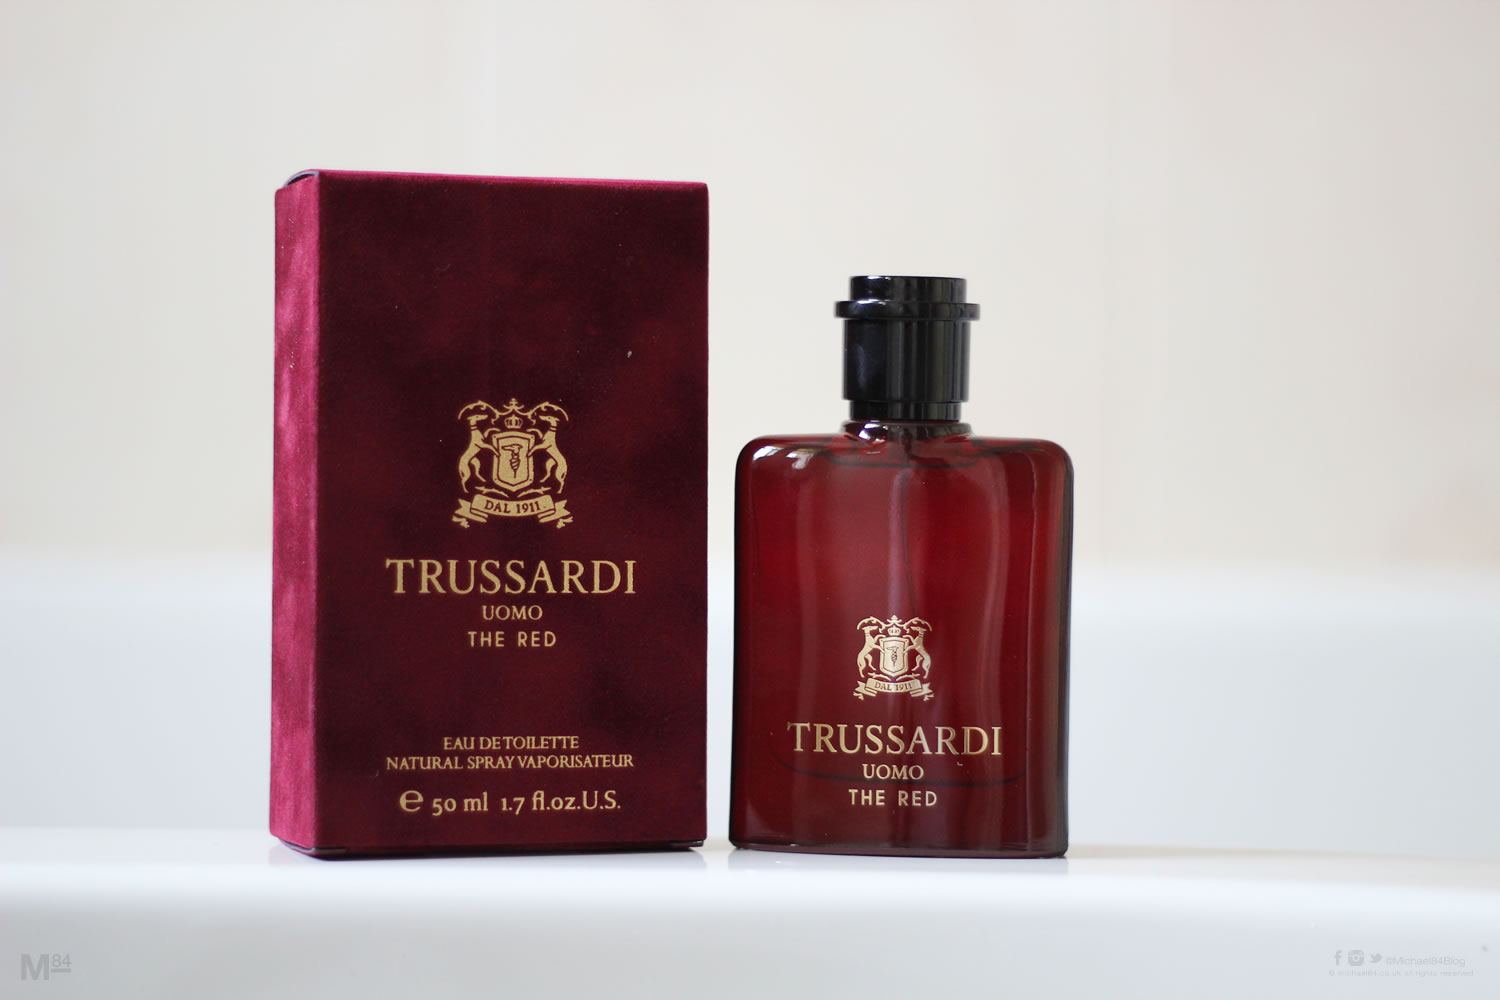 Uomo Salvatore Ferragamo Men's Fragrance Review & Unboxing